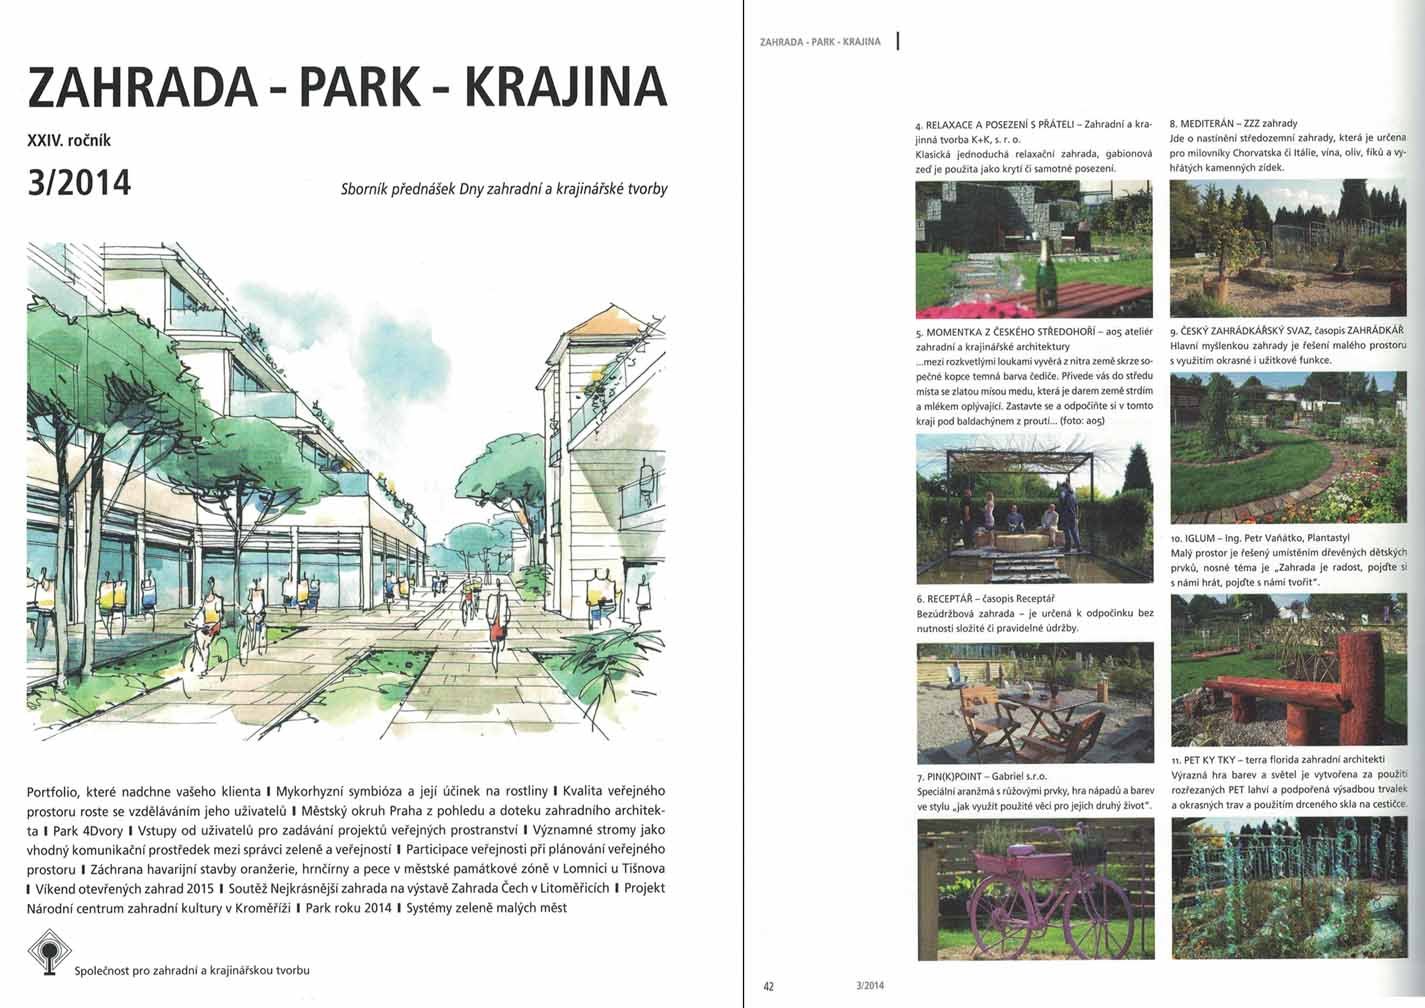 Zahrada Park Krajina 03/2014 - Competition The Most Beautiful  Garden (Bohemia Garden Exhibition)